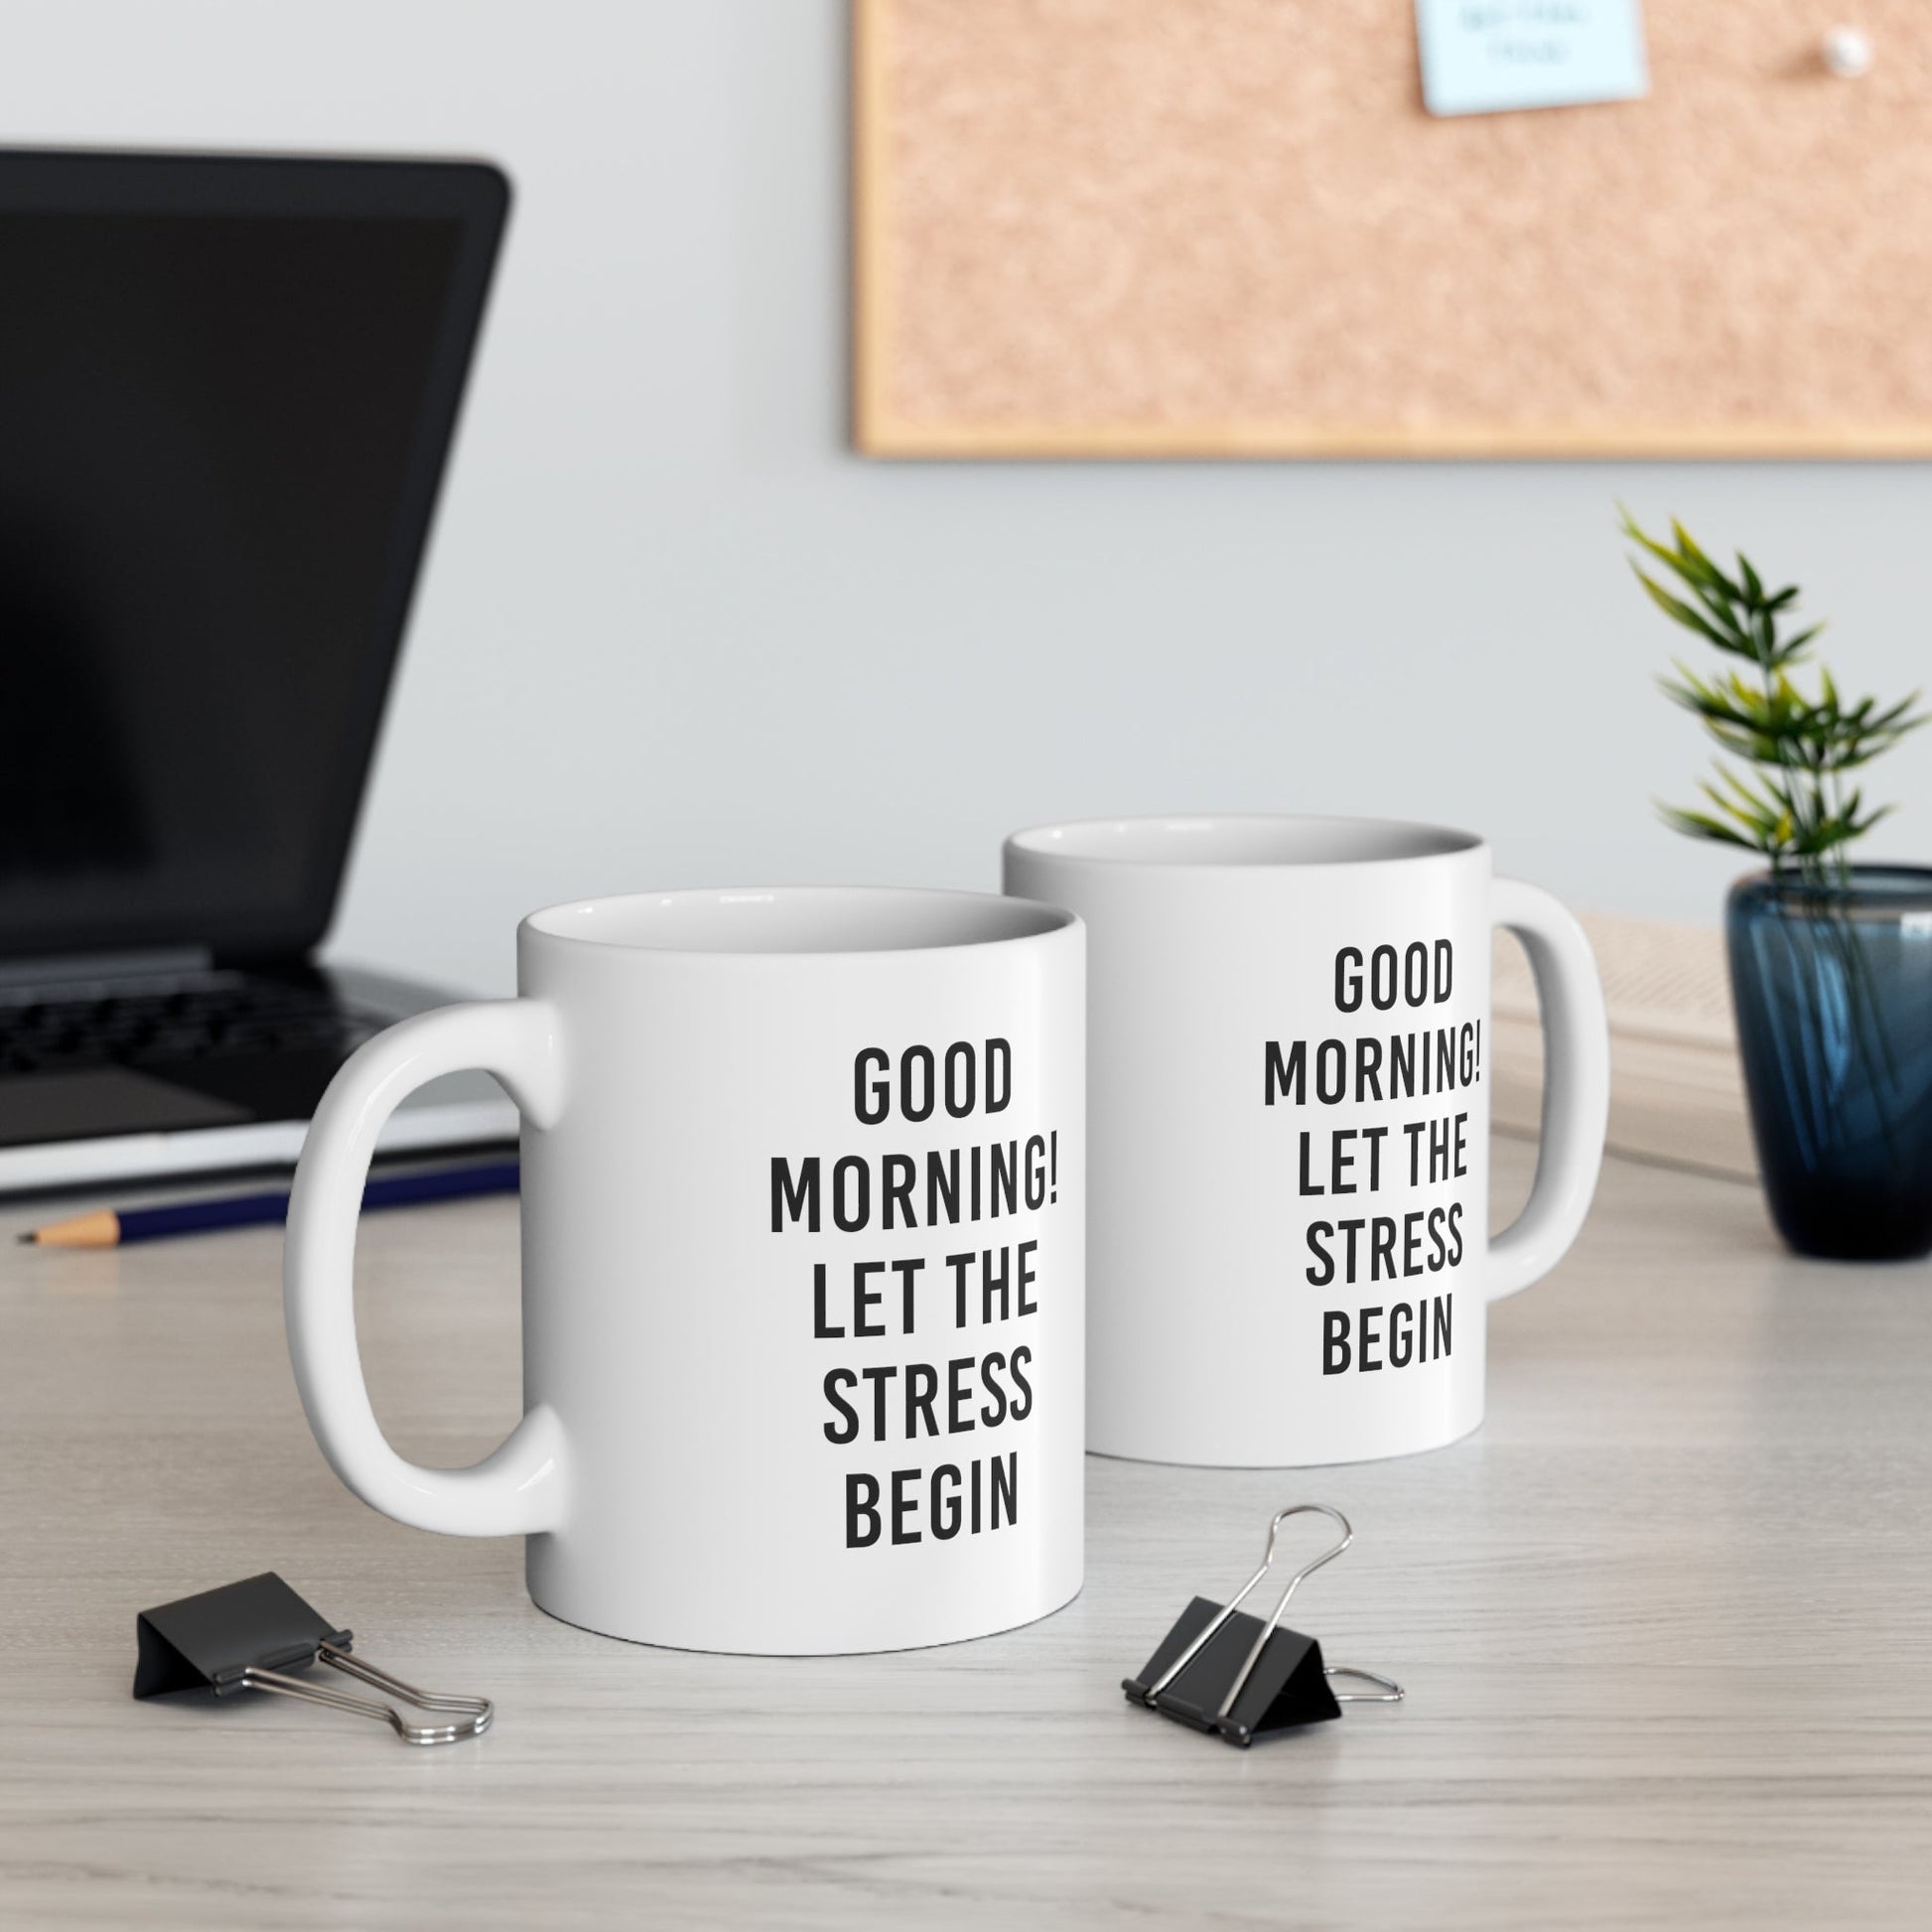 Good Morning! Let the Stress Begin Mug Coffee 11oz Jolly Mugs